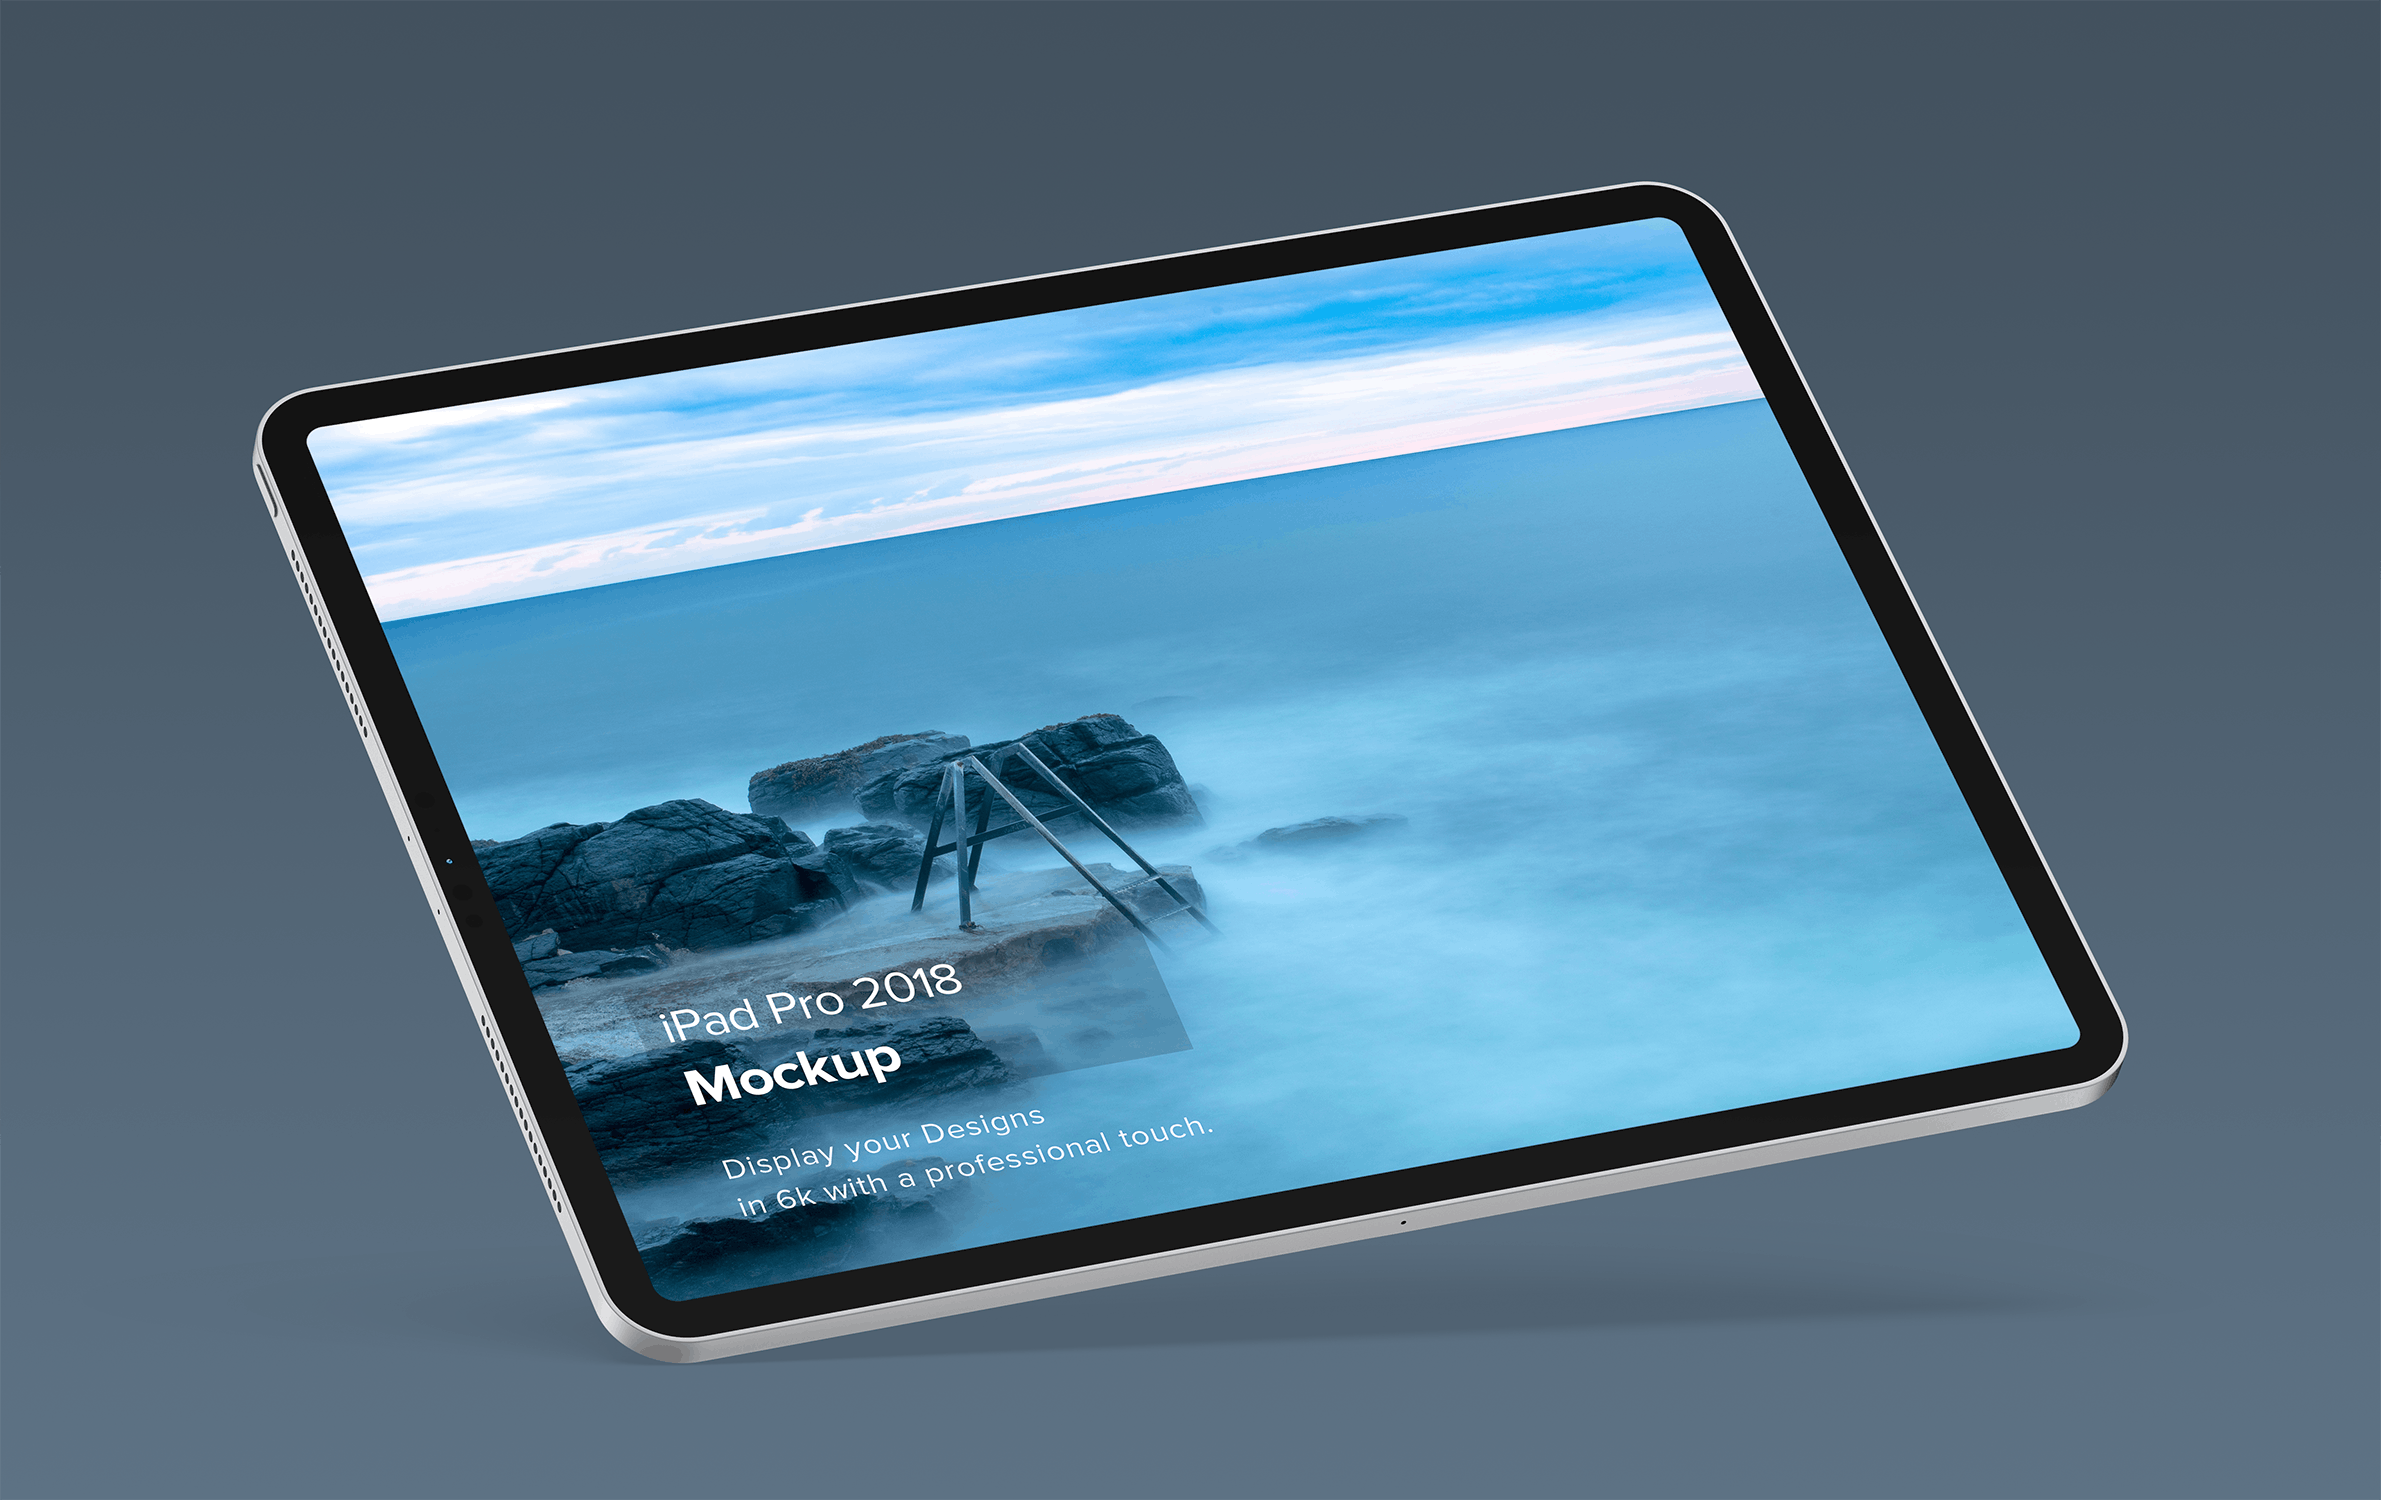 iPad Pro专业平板电脑设计演示第一素材精选样机模板套装v2 iPad Mockup 2.0插图(4)